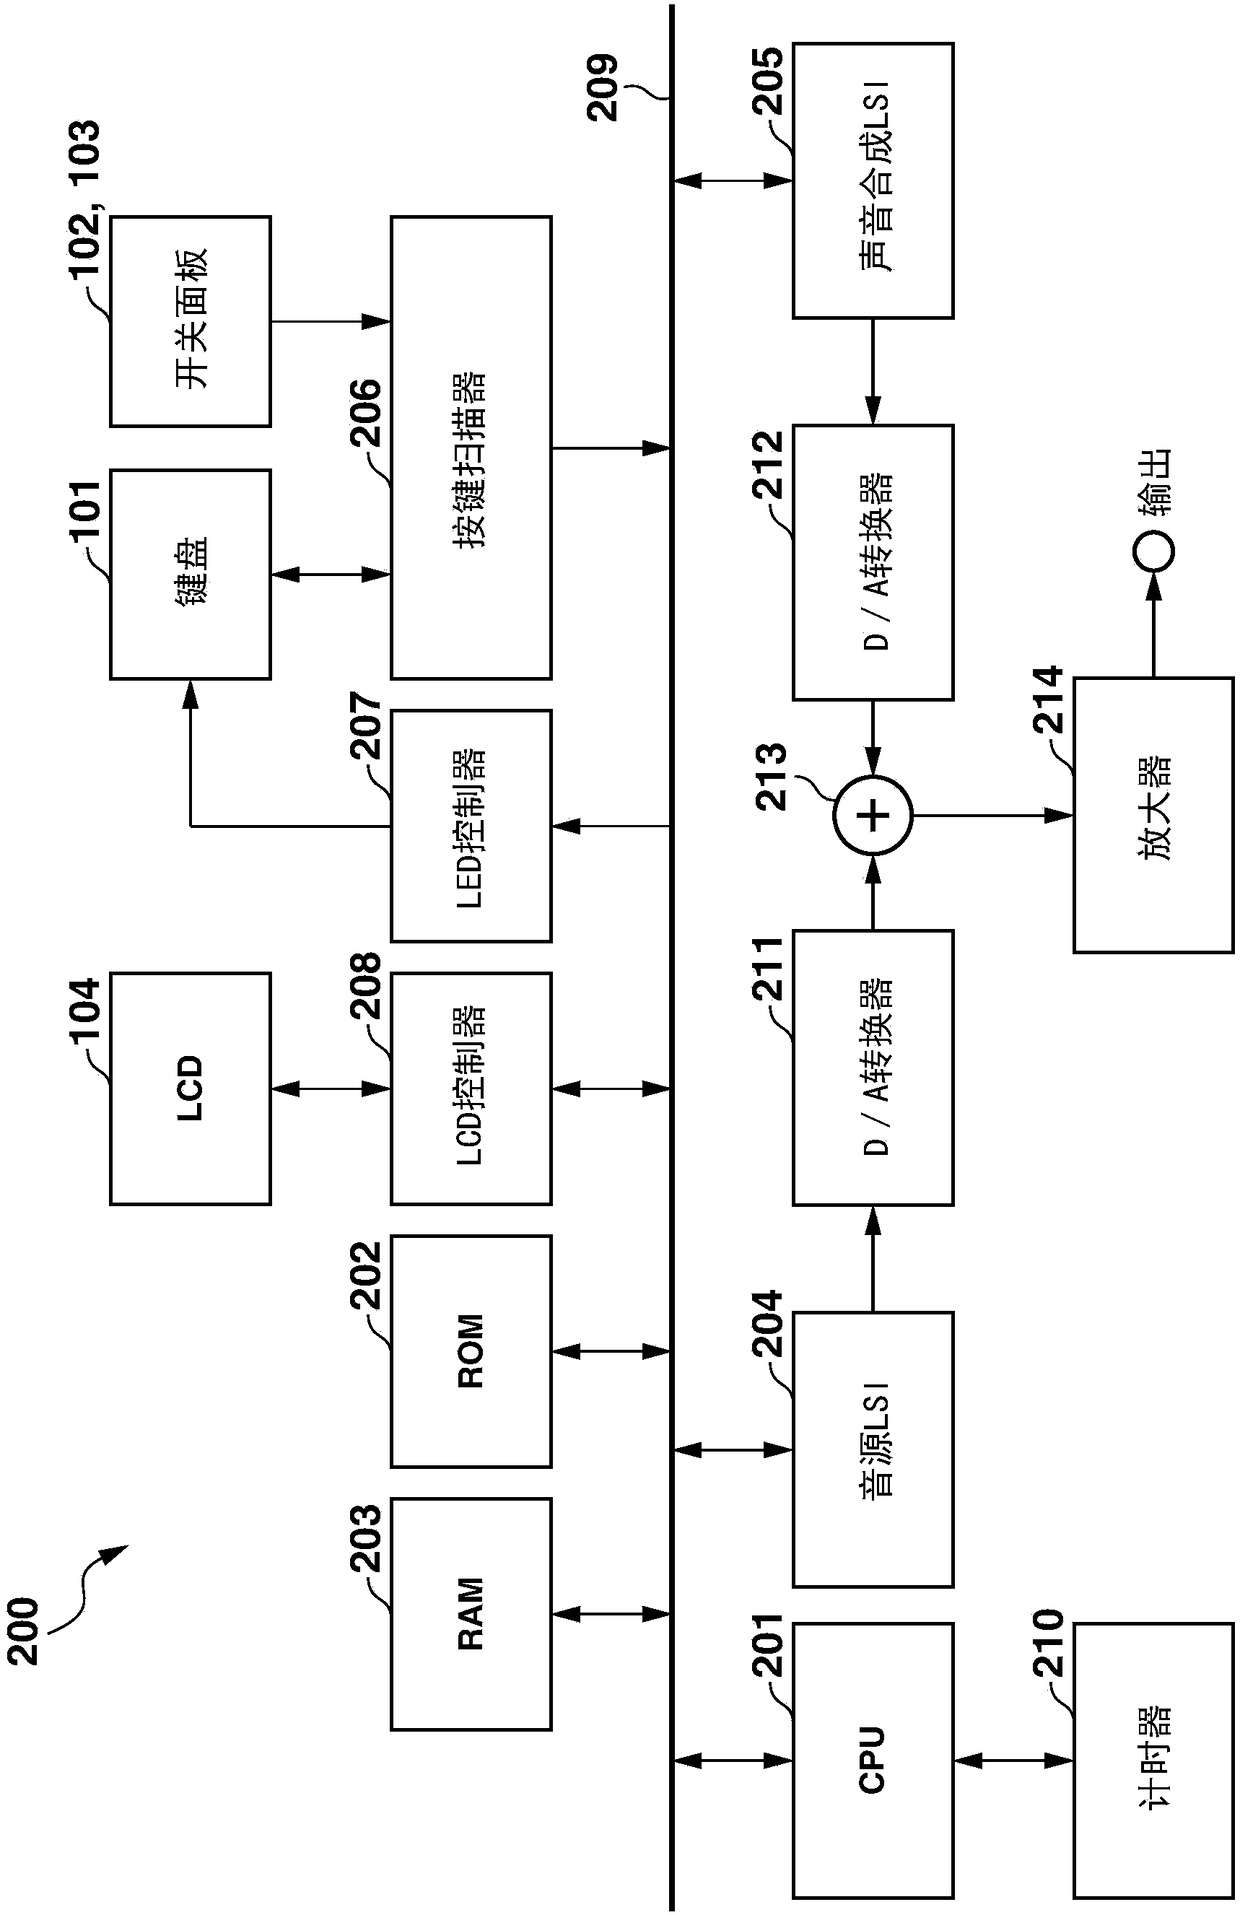 Electronic musical instrument, method of controlling electronic musical instrument, and recording medium